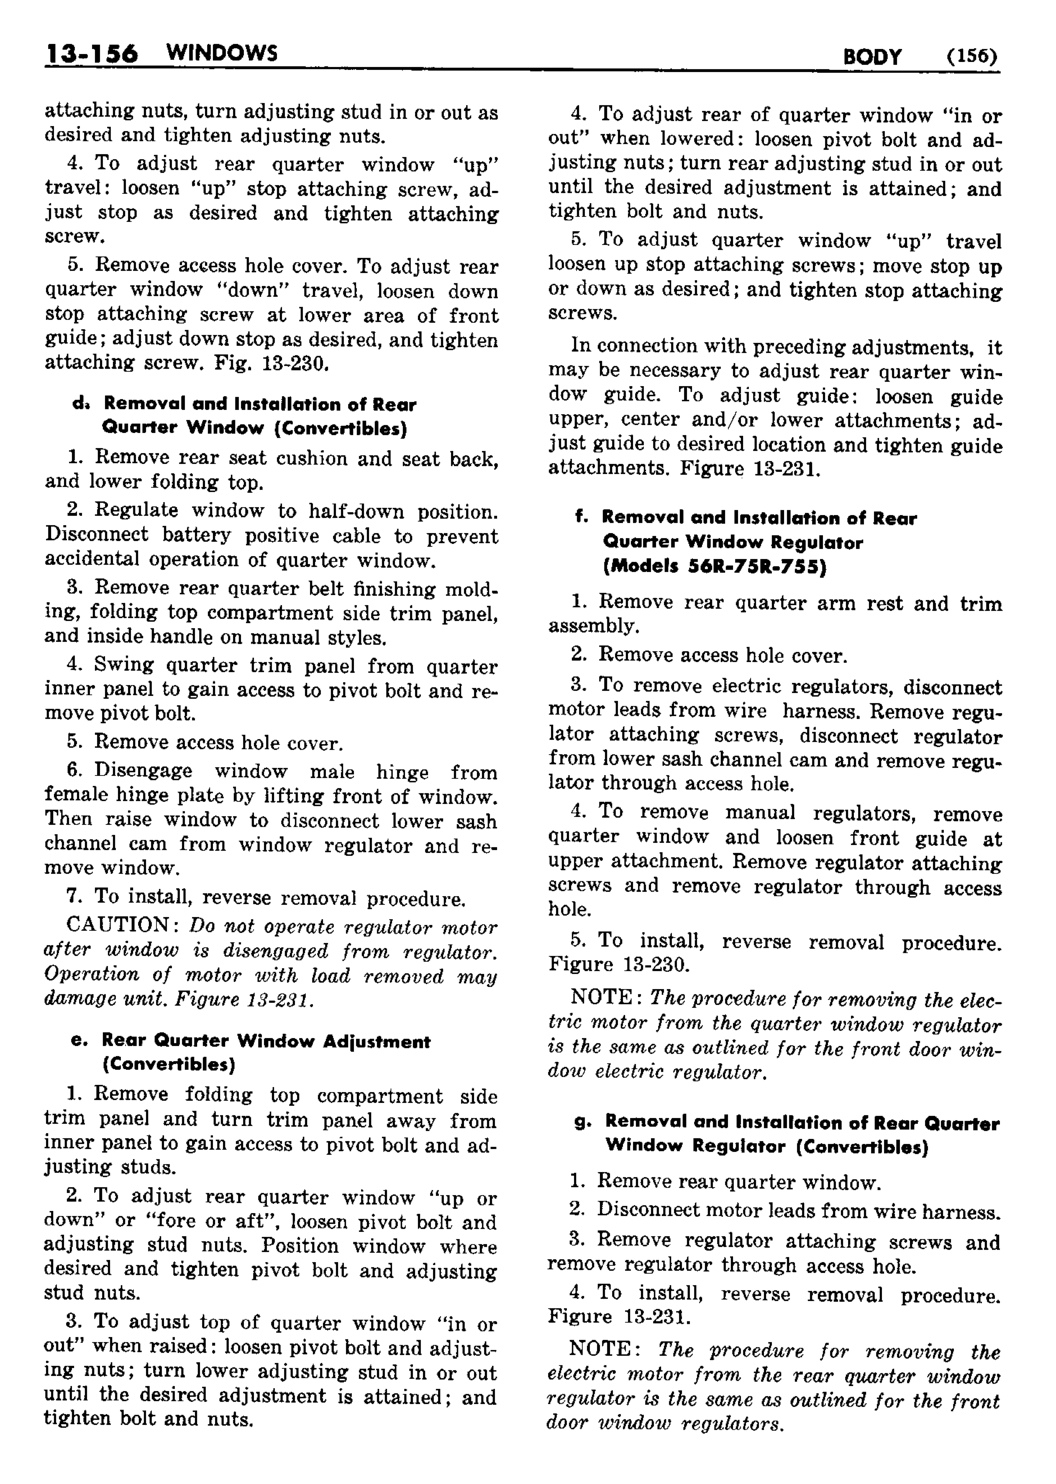 n_1958 Buick Body Service Manual-157-157.jpg